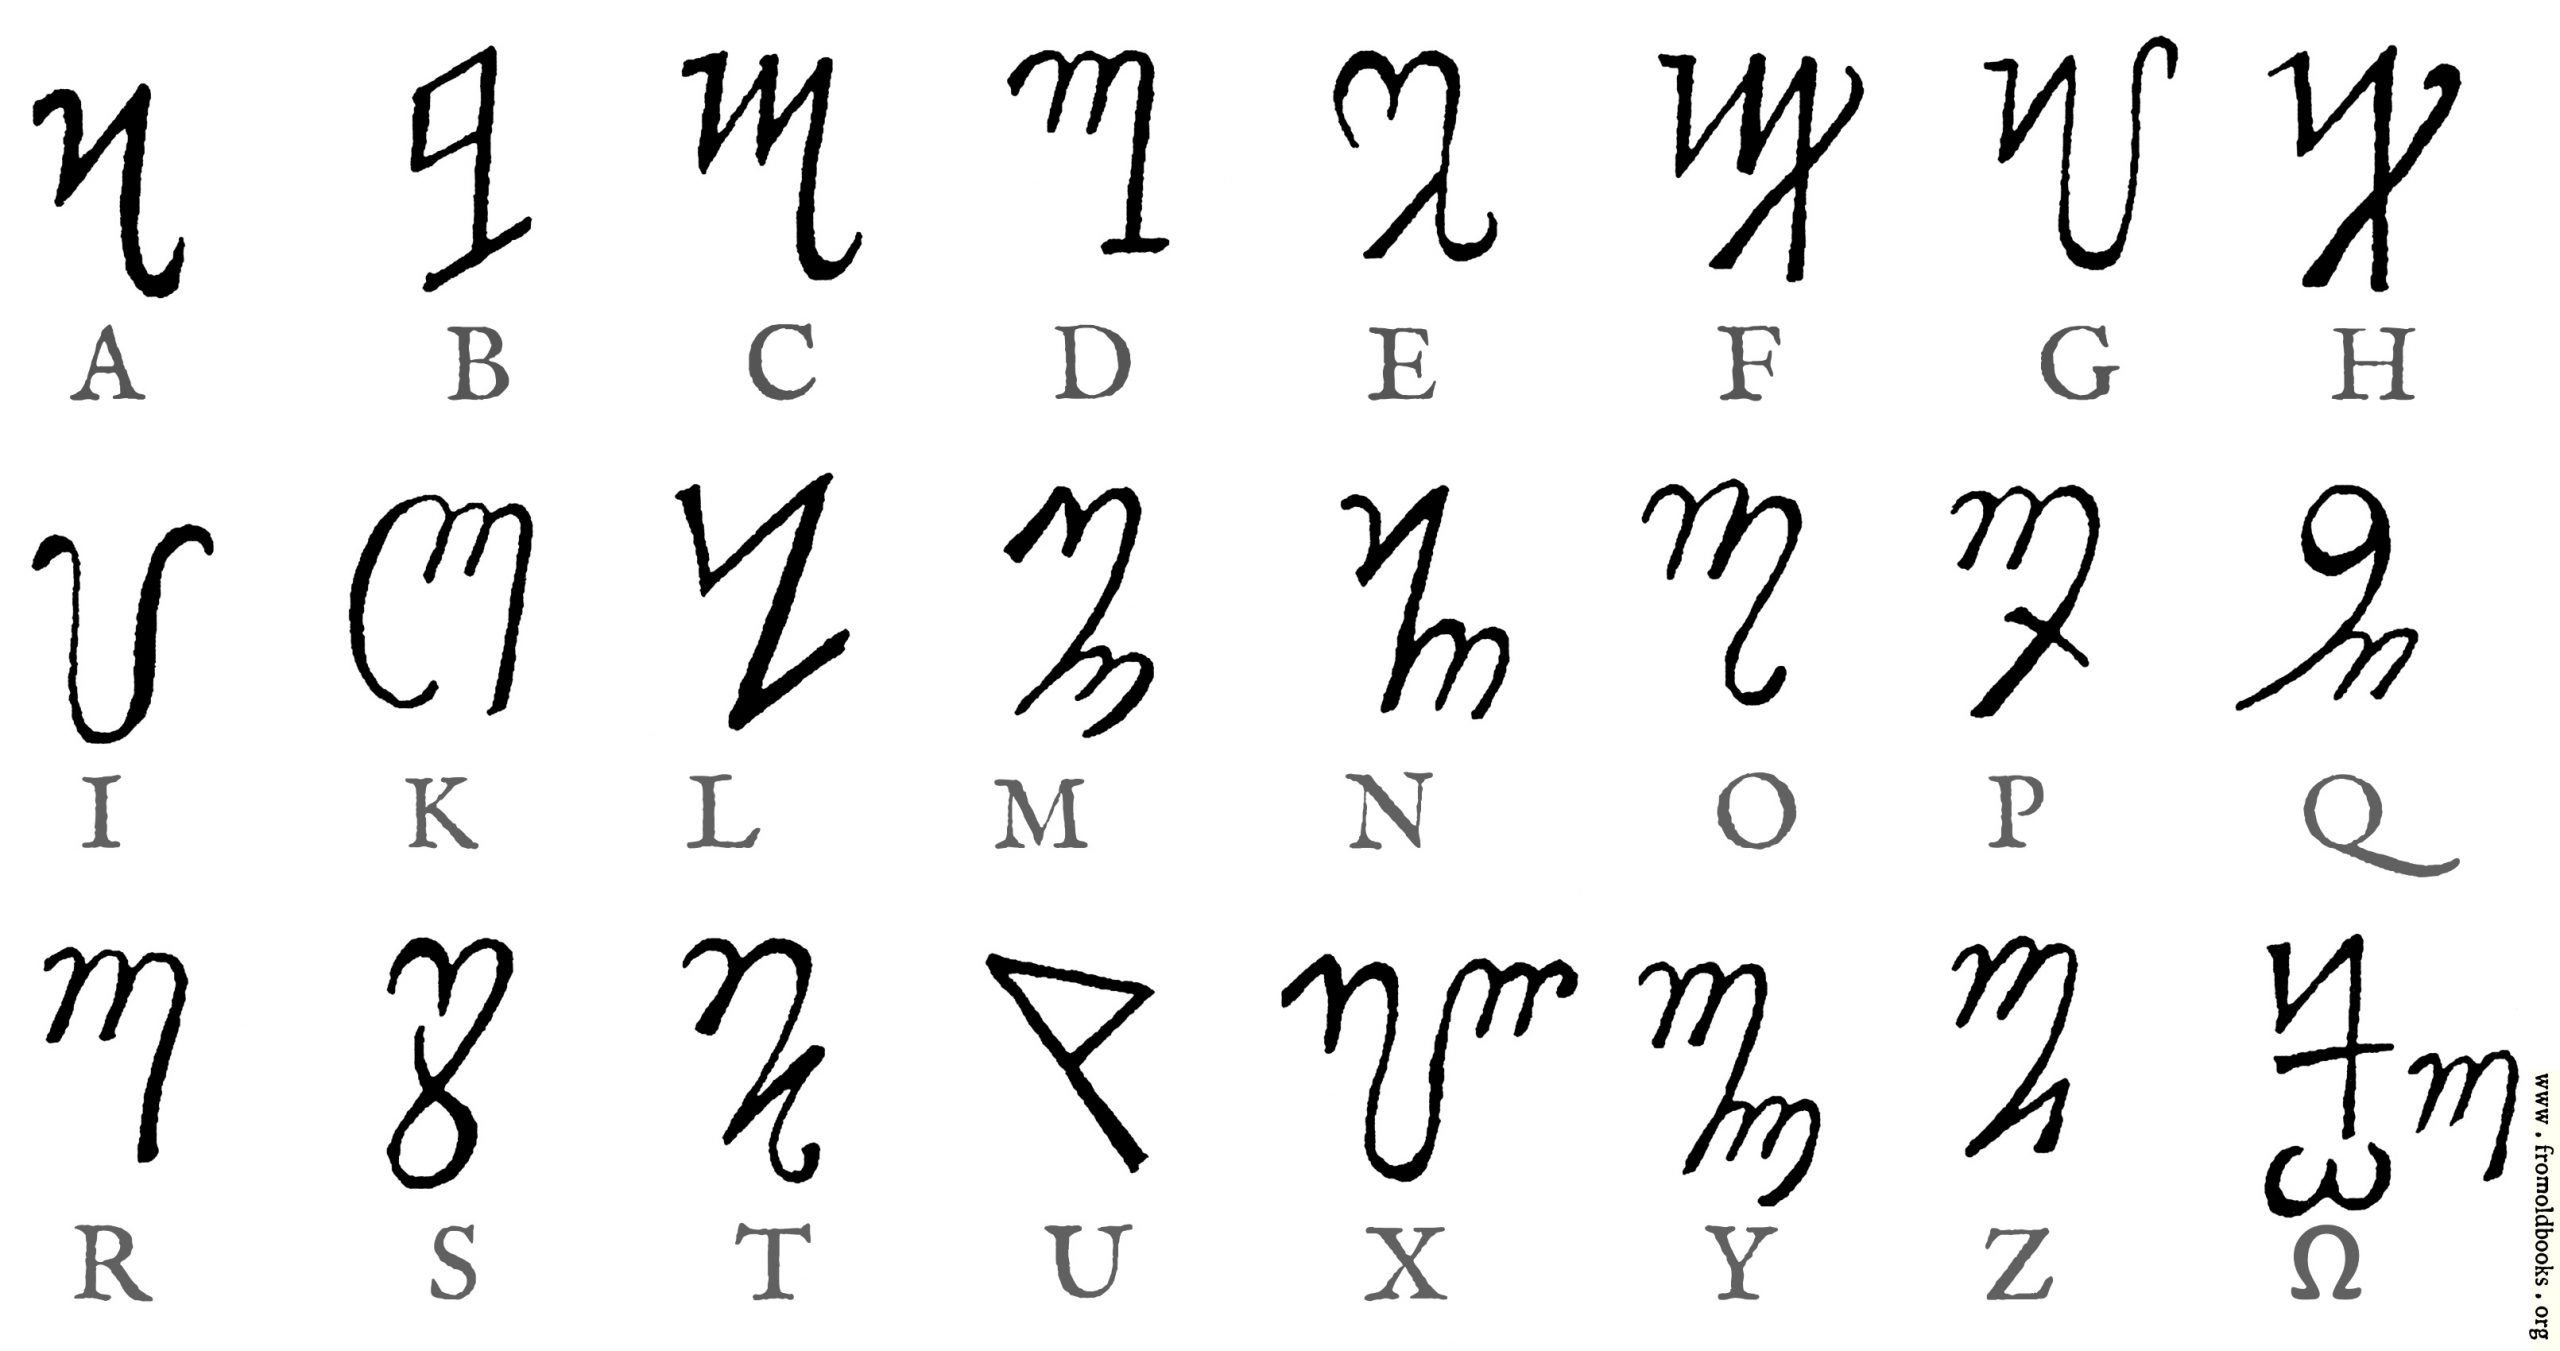 Six Magical Alphabets To Know And Use - Evolve + Ascend concernant Alphabet En Script